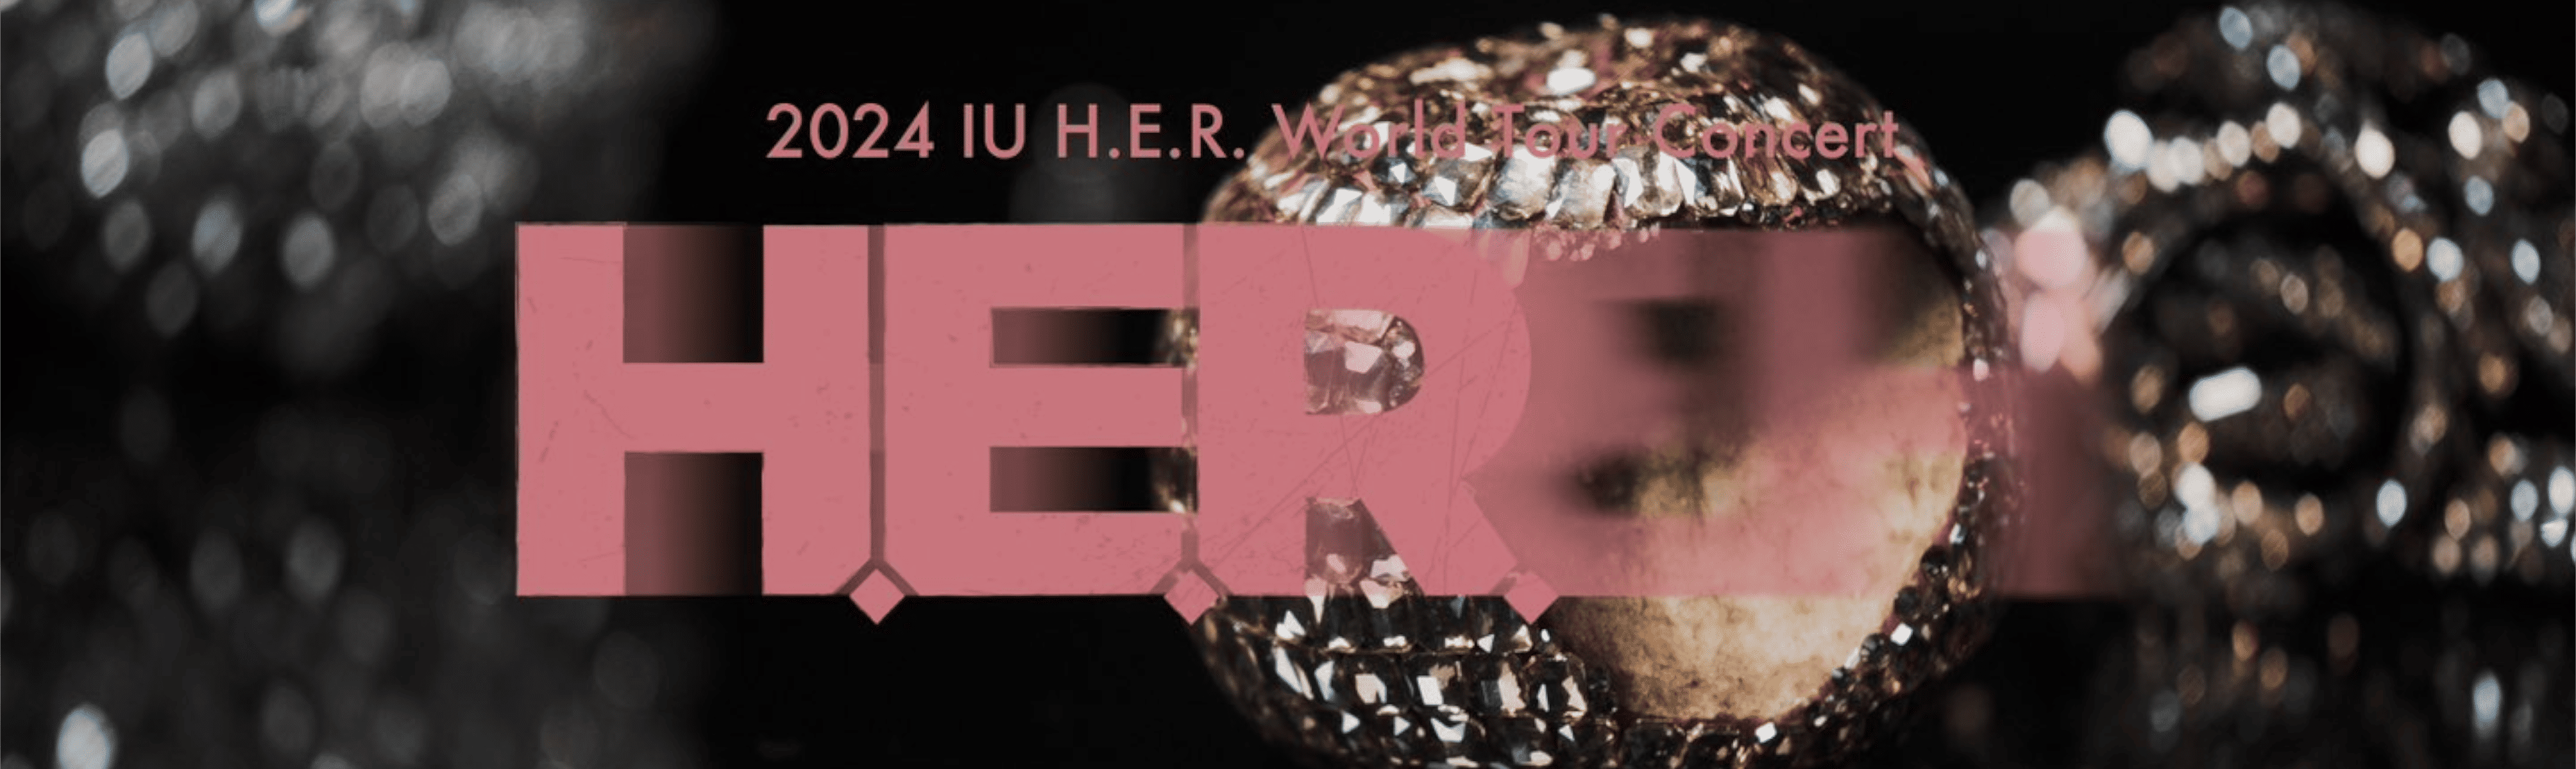 2024 IU H.E.R WORLD TOUR Date Poster